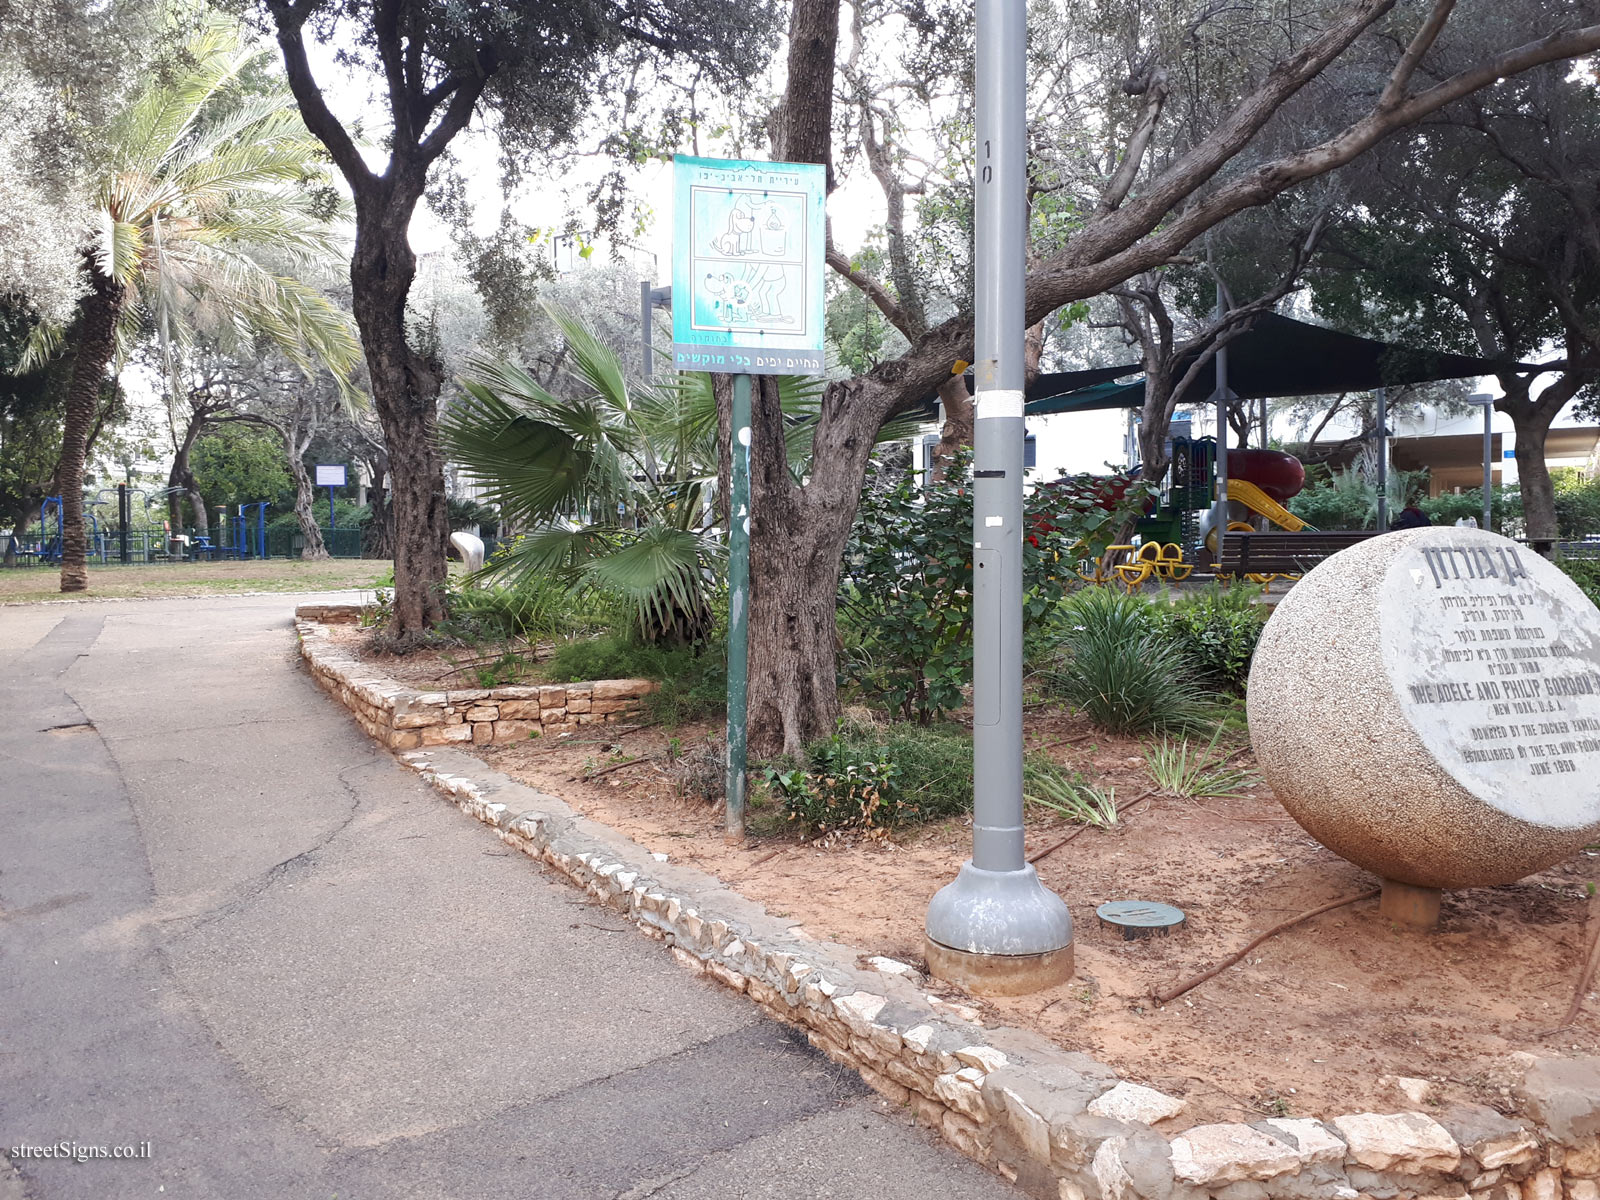 Tel Aviv - The Adele and Philip Gordon Park - Be’eri St 33, Tel Aviv-Yafo, Israel